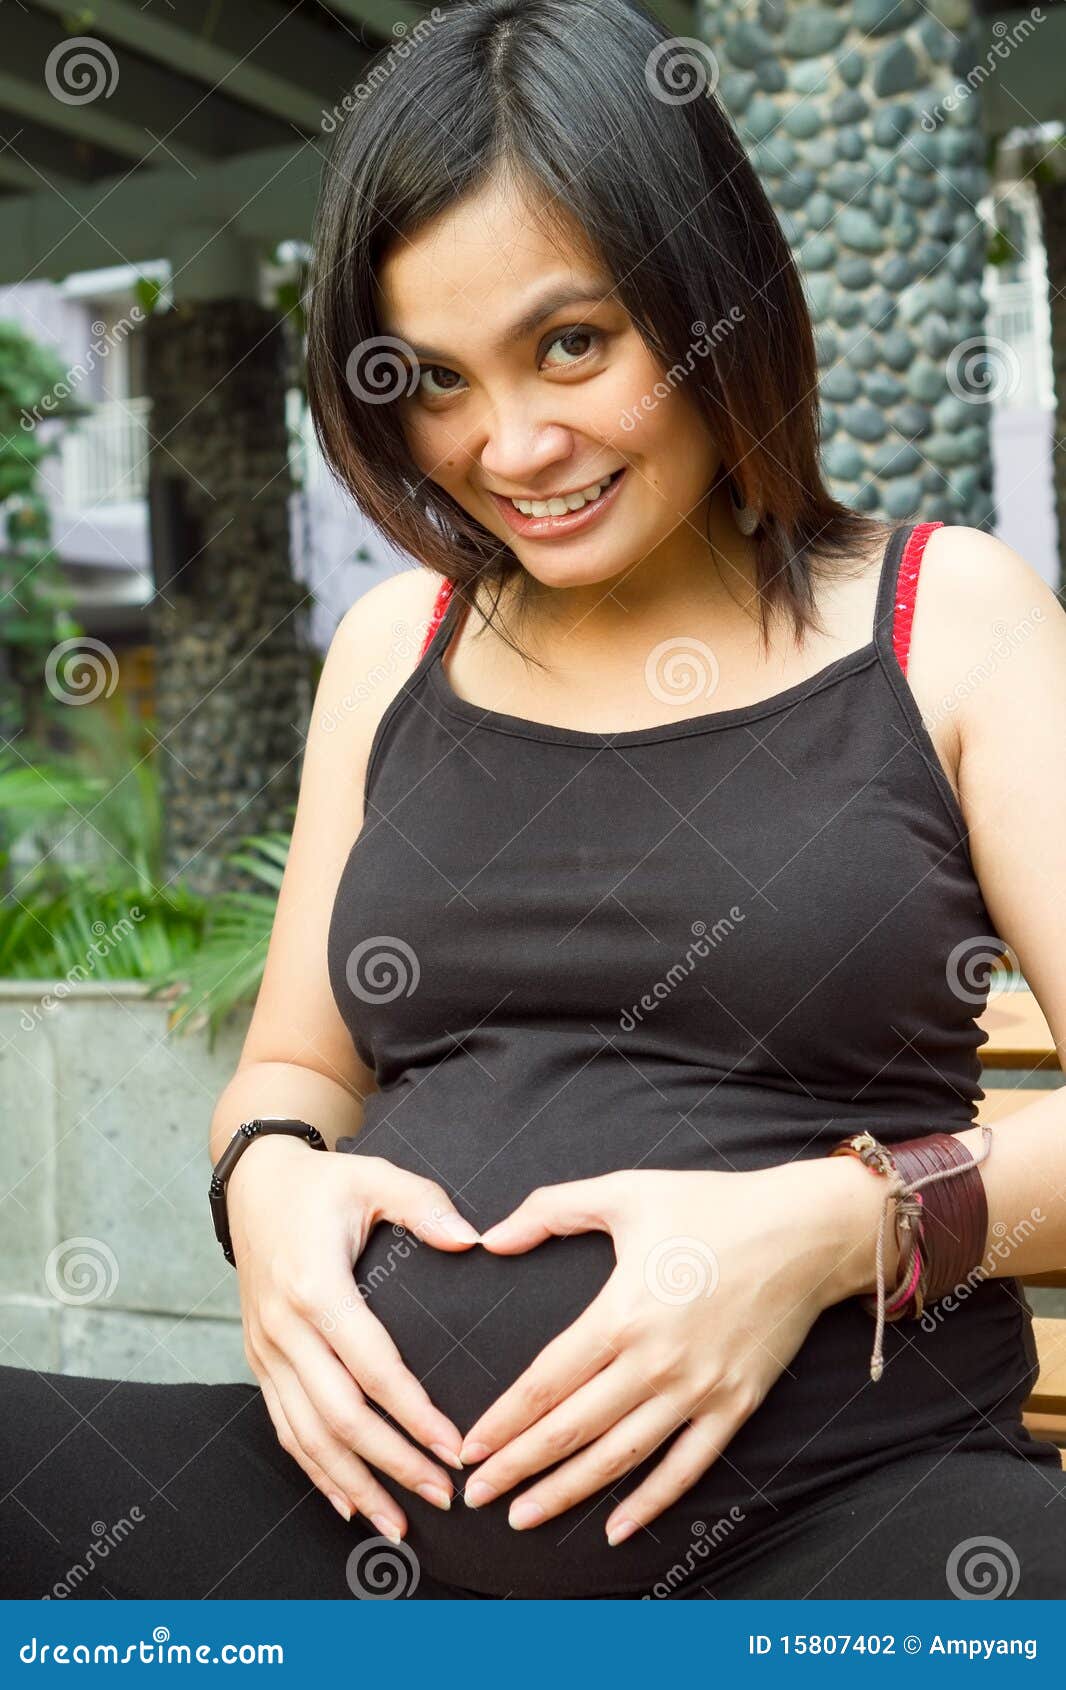 https://thumbs.dreamstime.com/z/asian-pregnant-woman-love-pregnancy-15807402.jpg